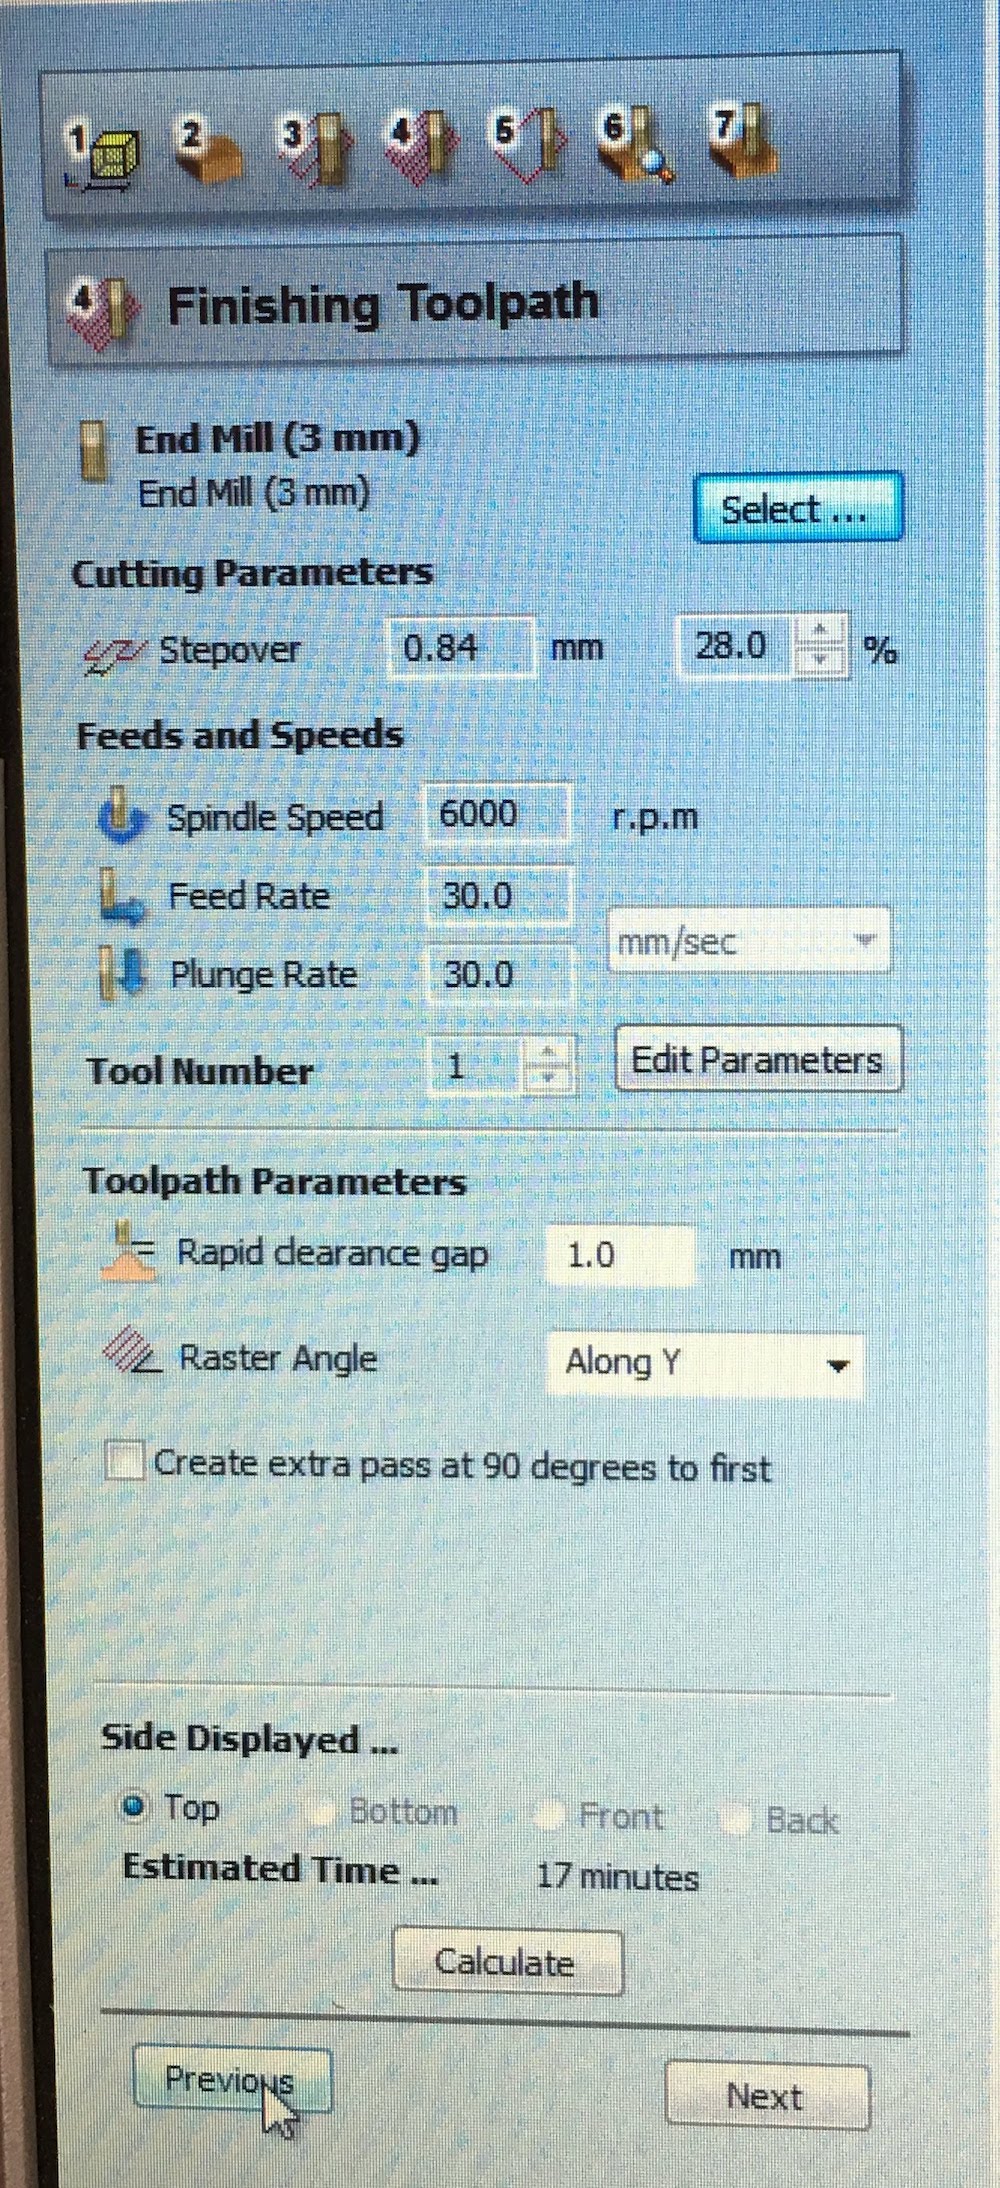 My used finishing toolpath settings